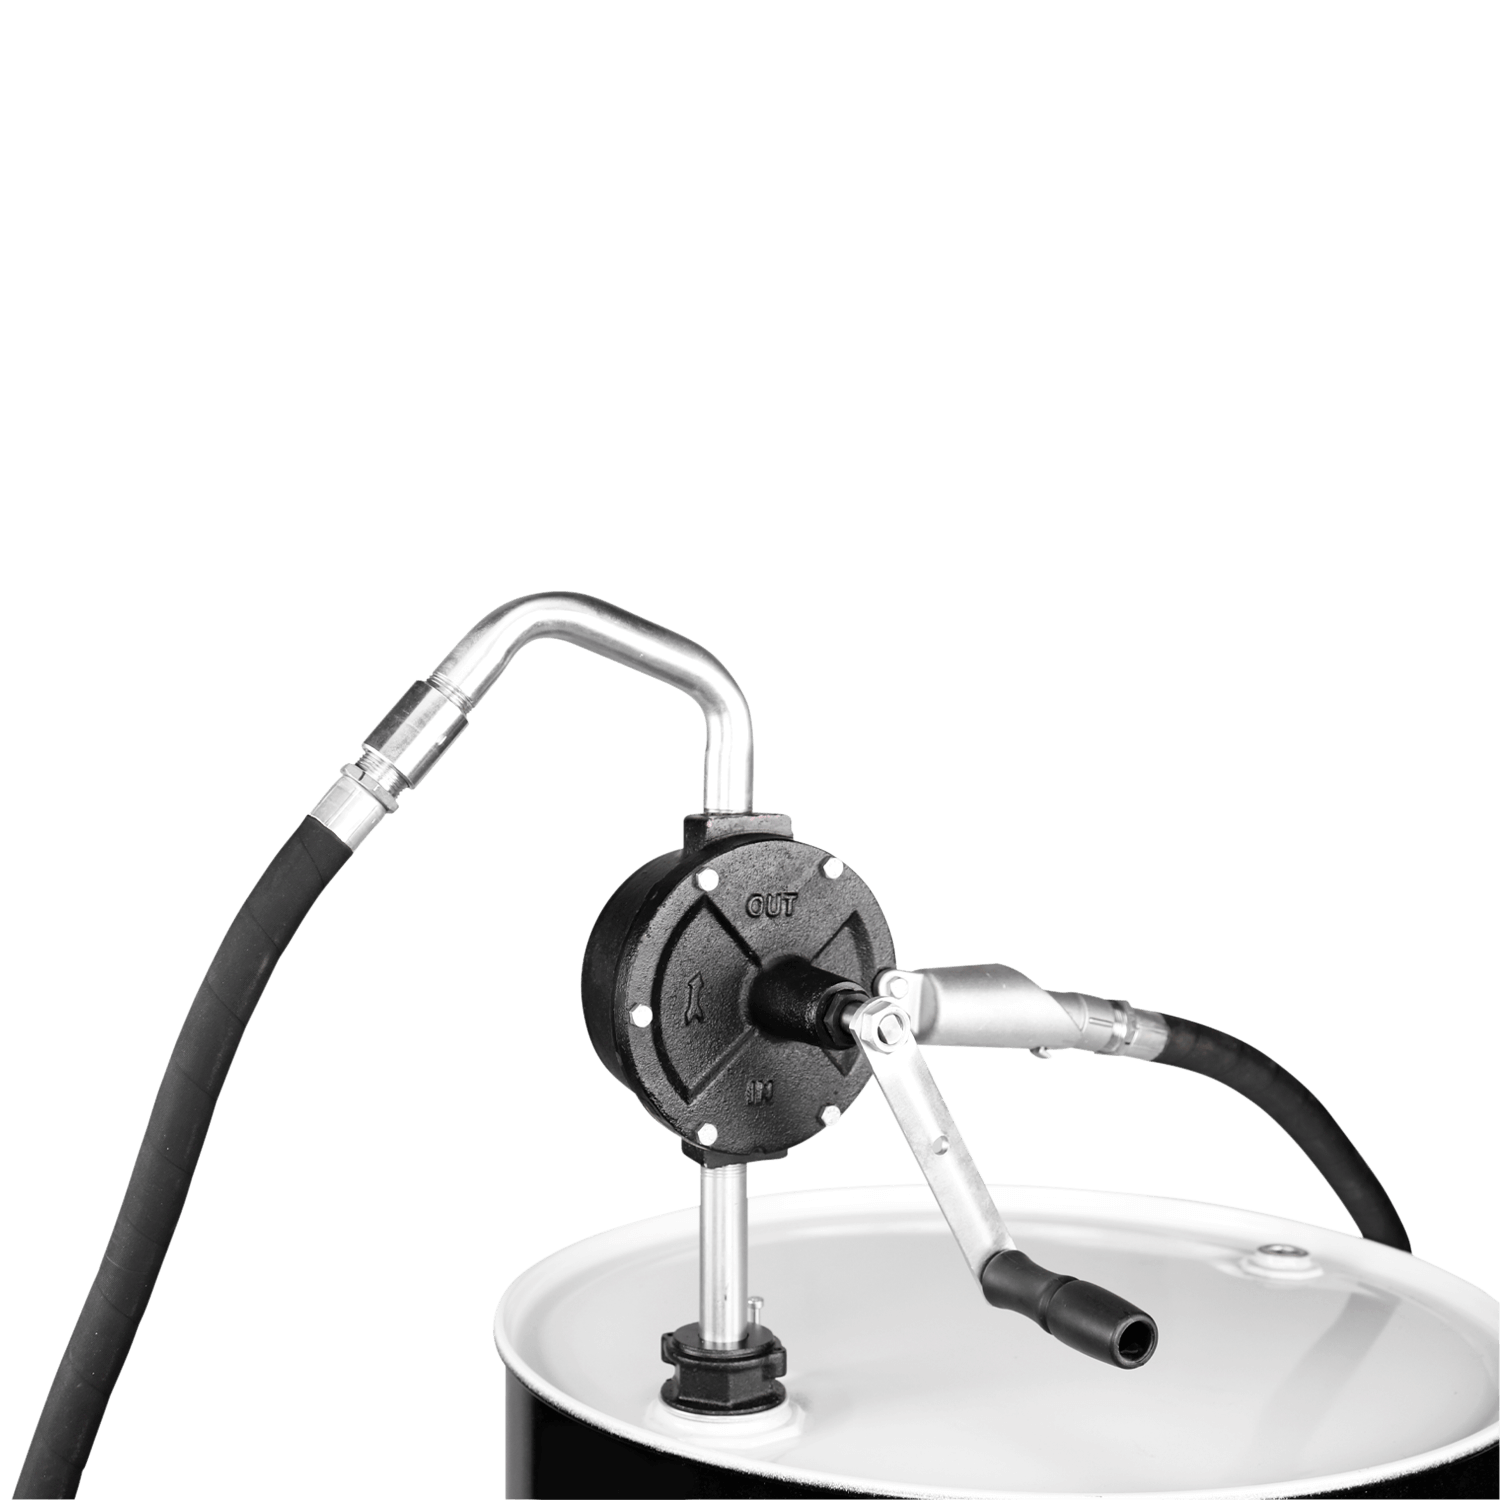 zeeline cast iron rotary pump with hose